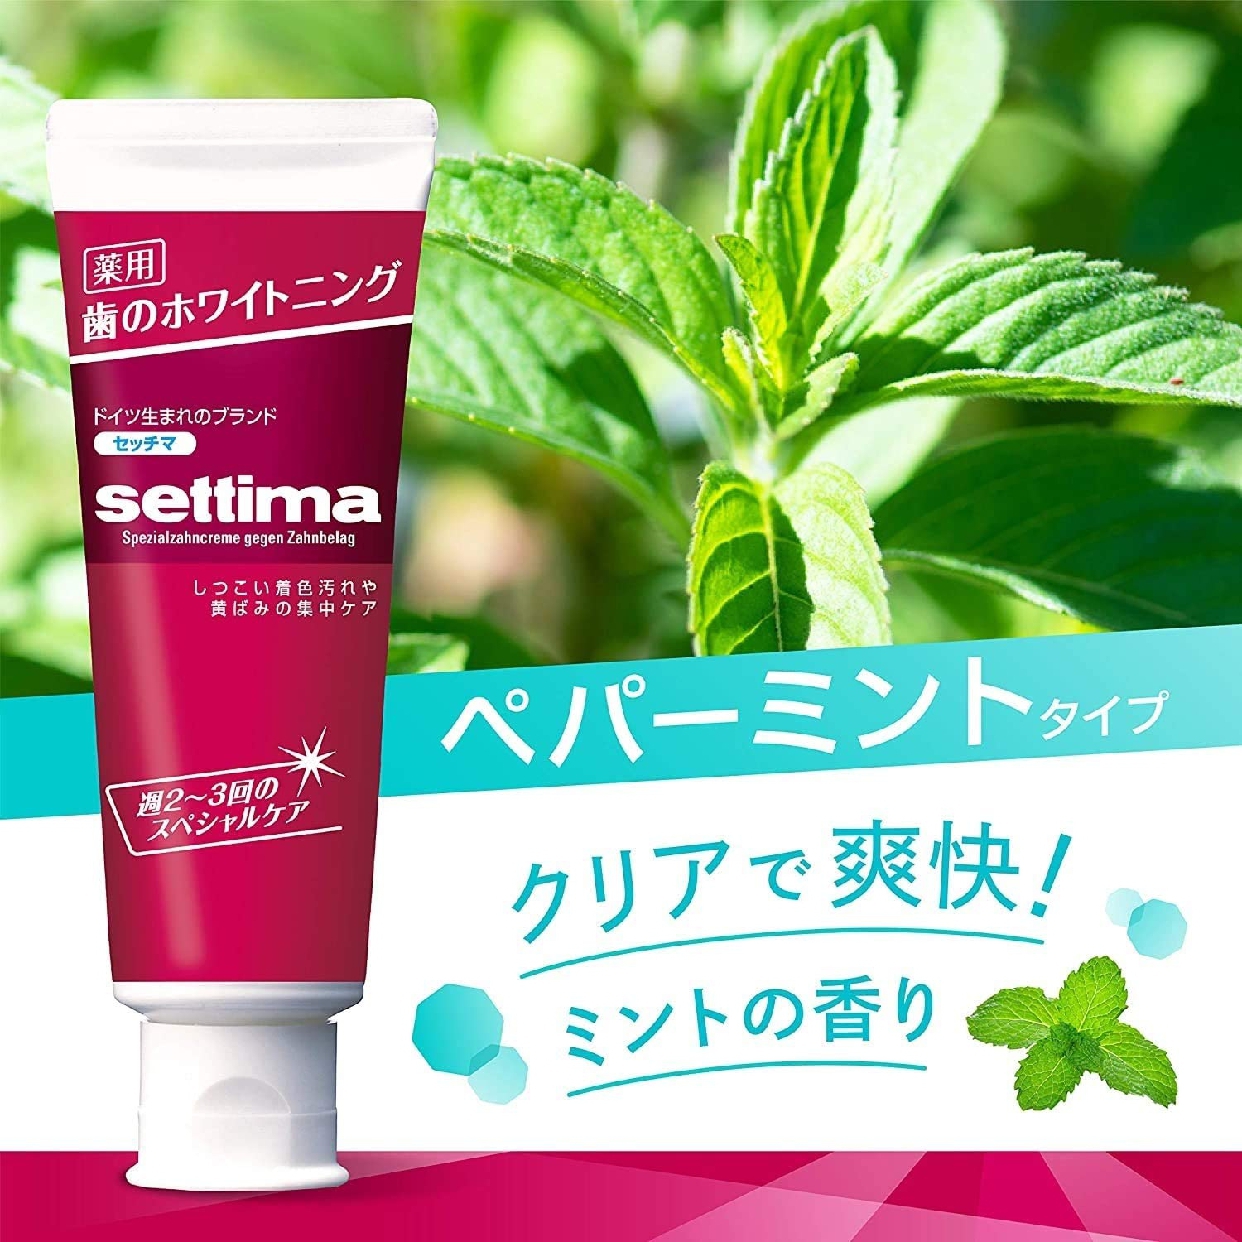 settima(セッチマ) はみがき スペシャルの商品画像8 